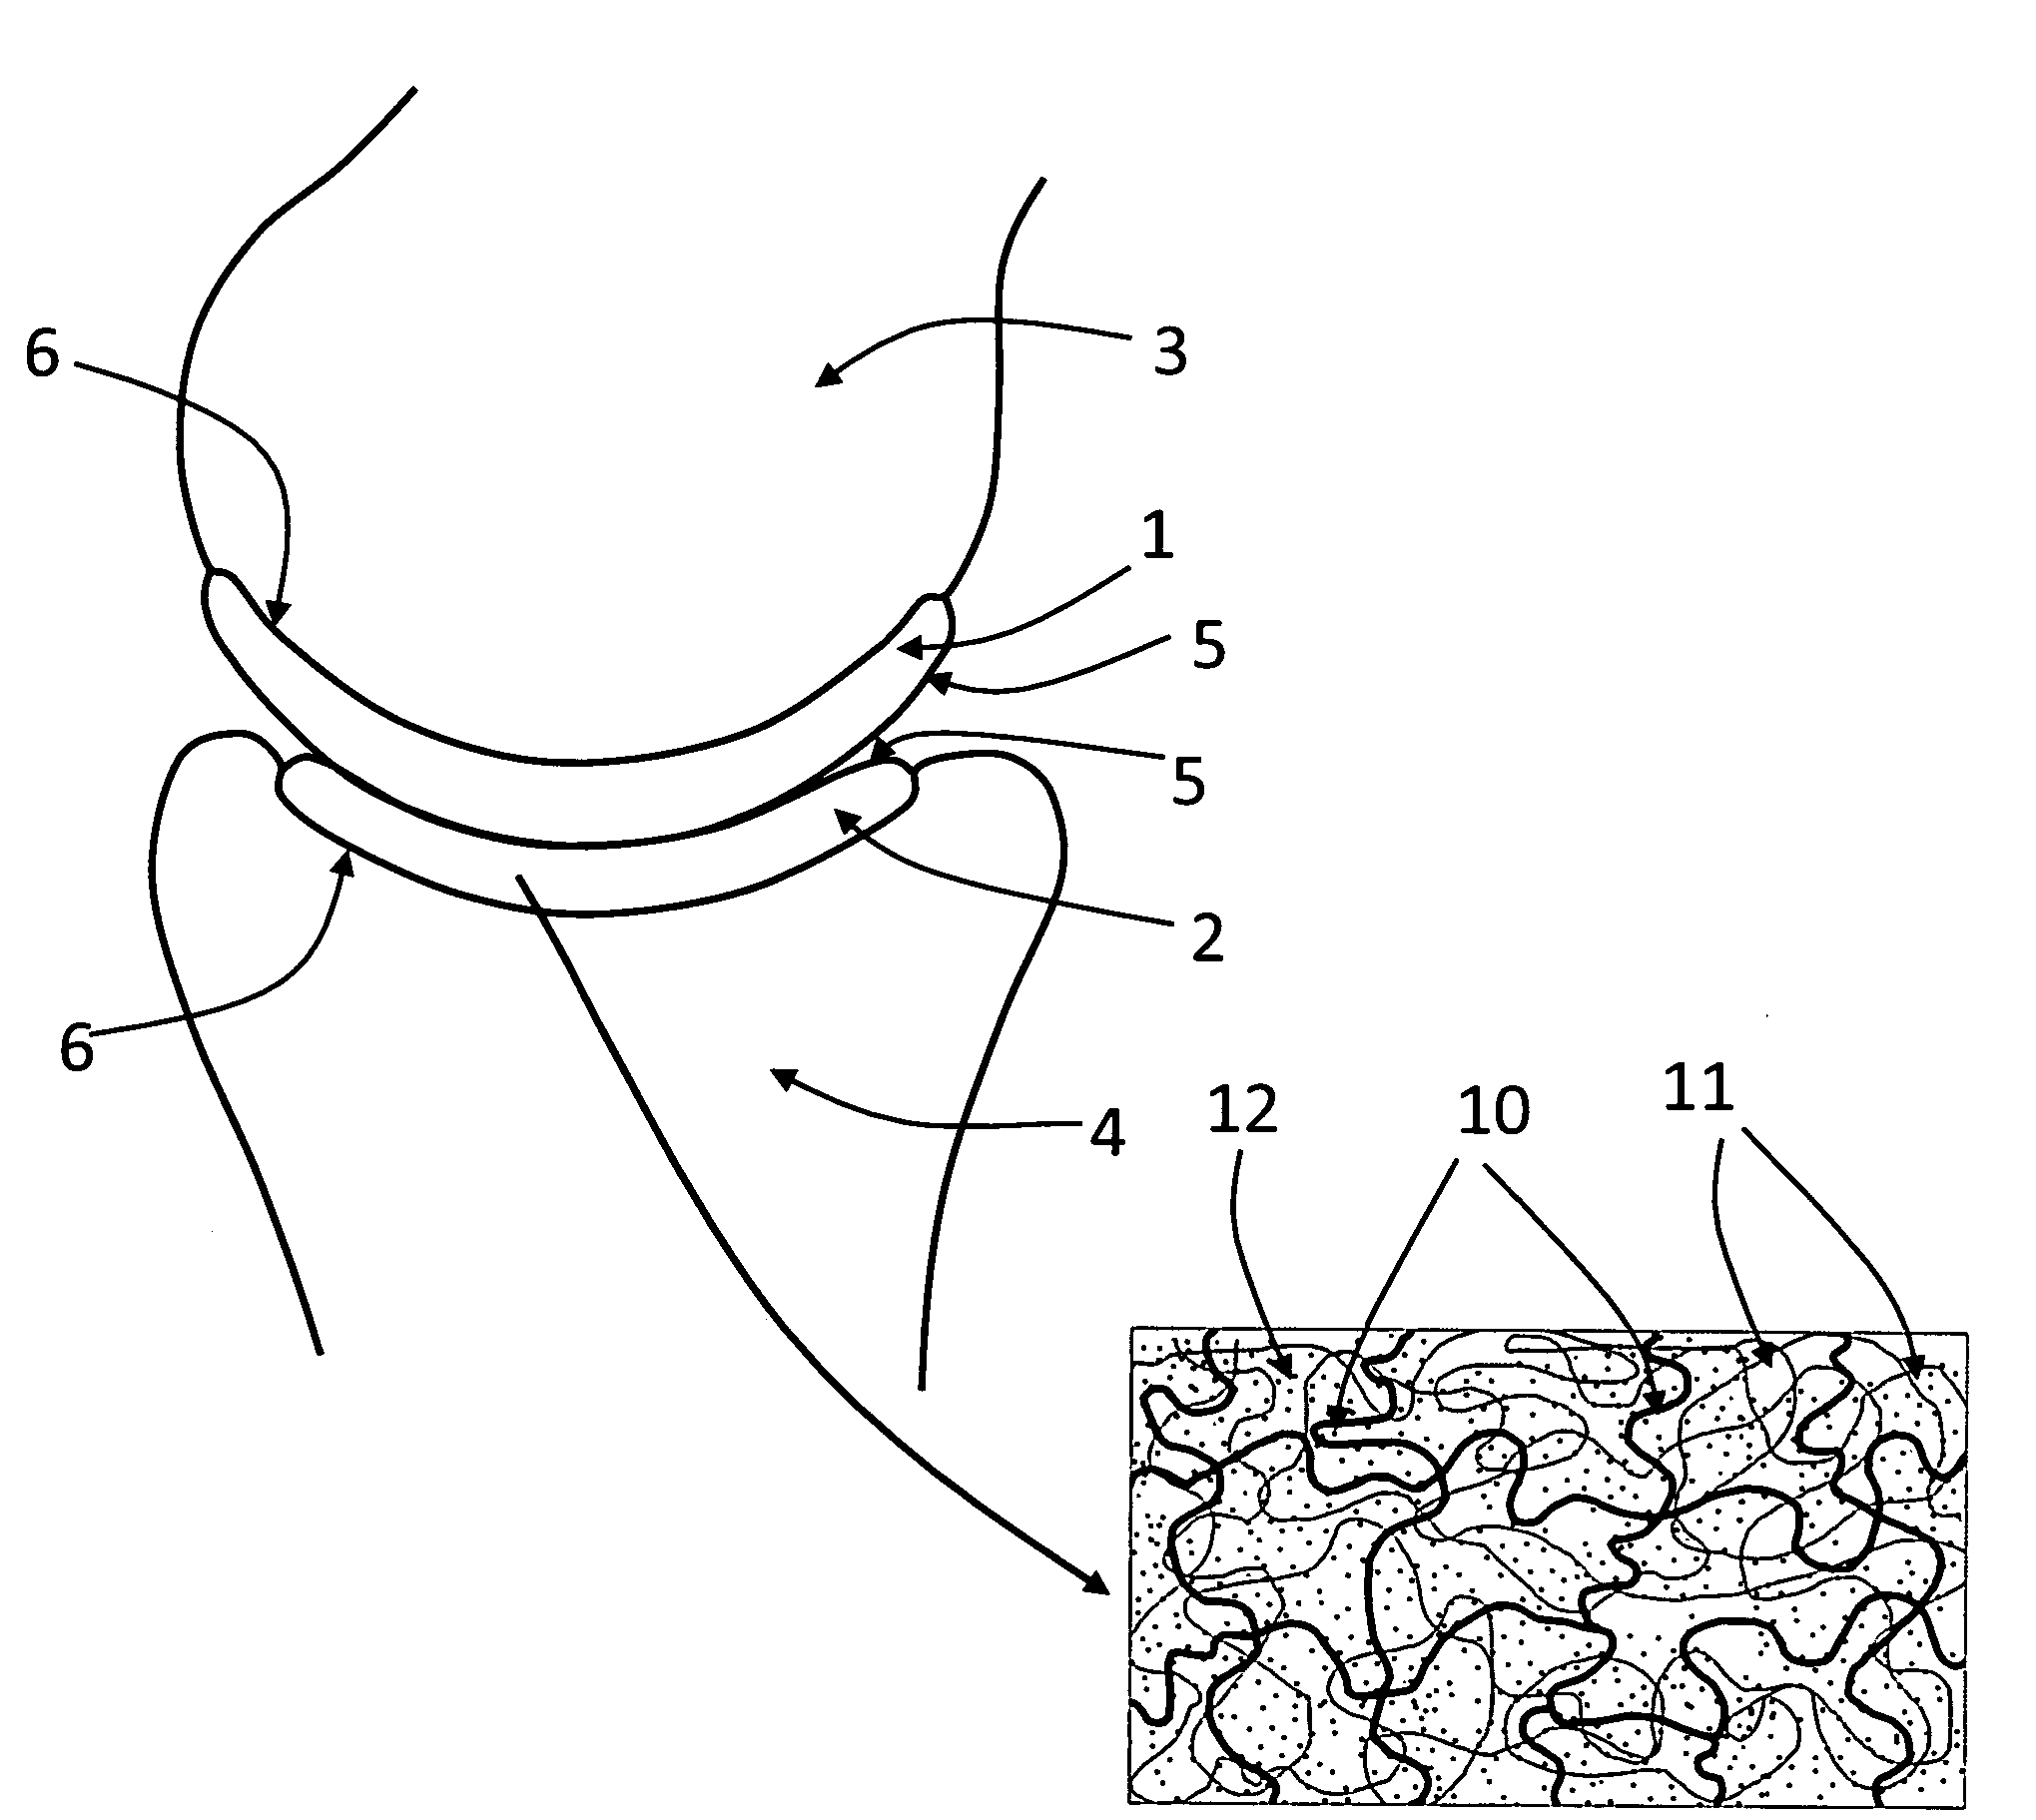 Hydrogel arthroplasty device